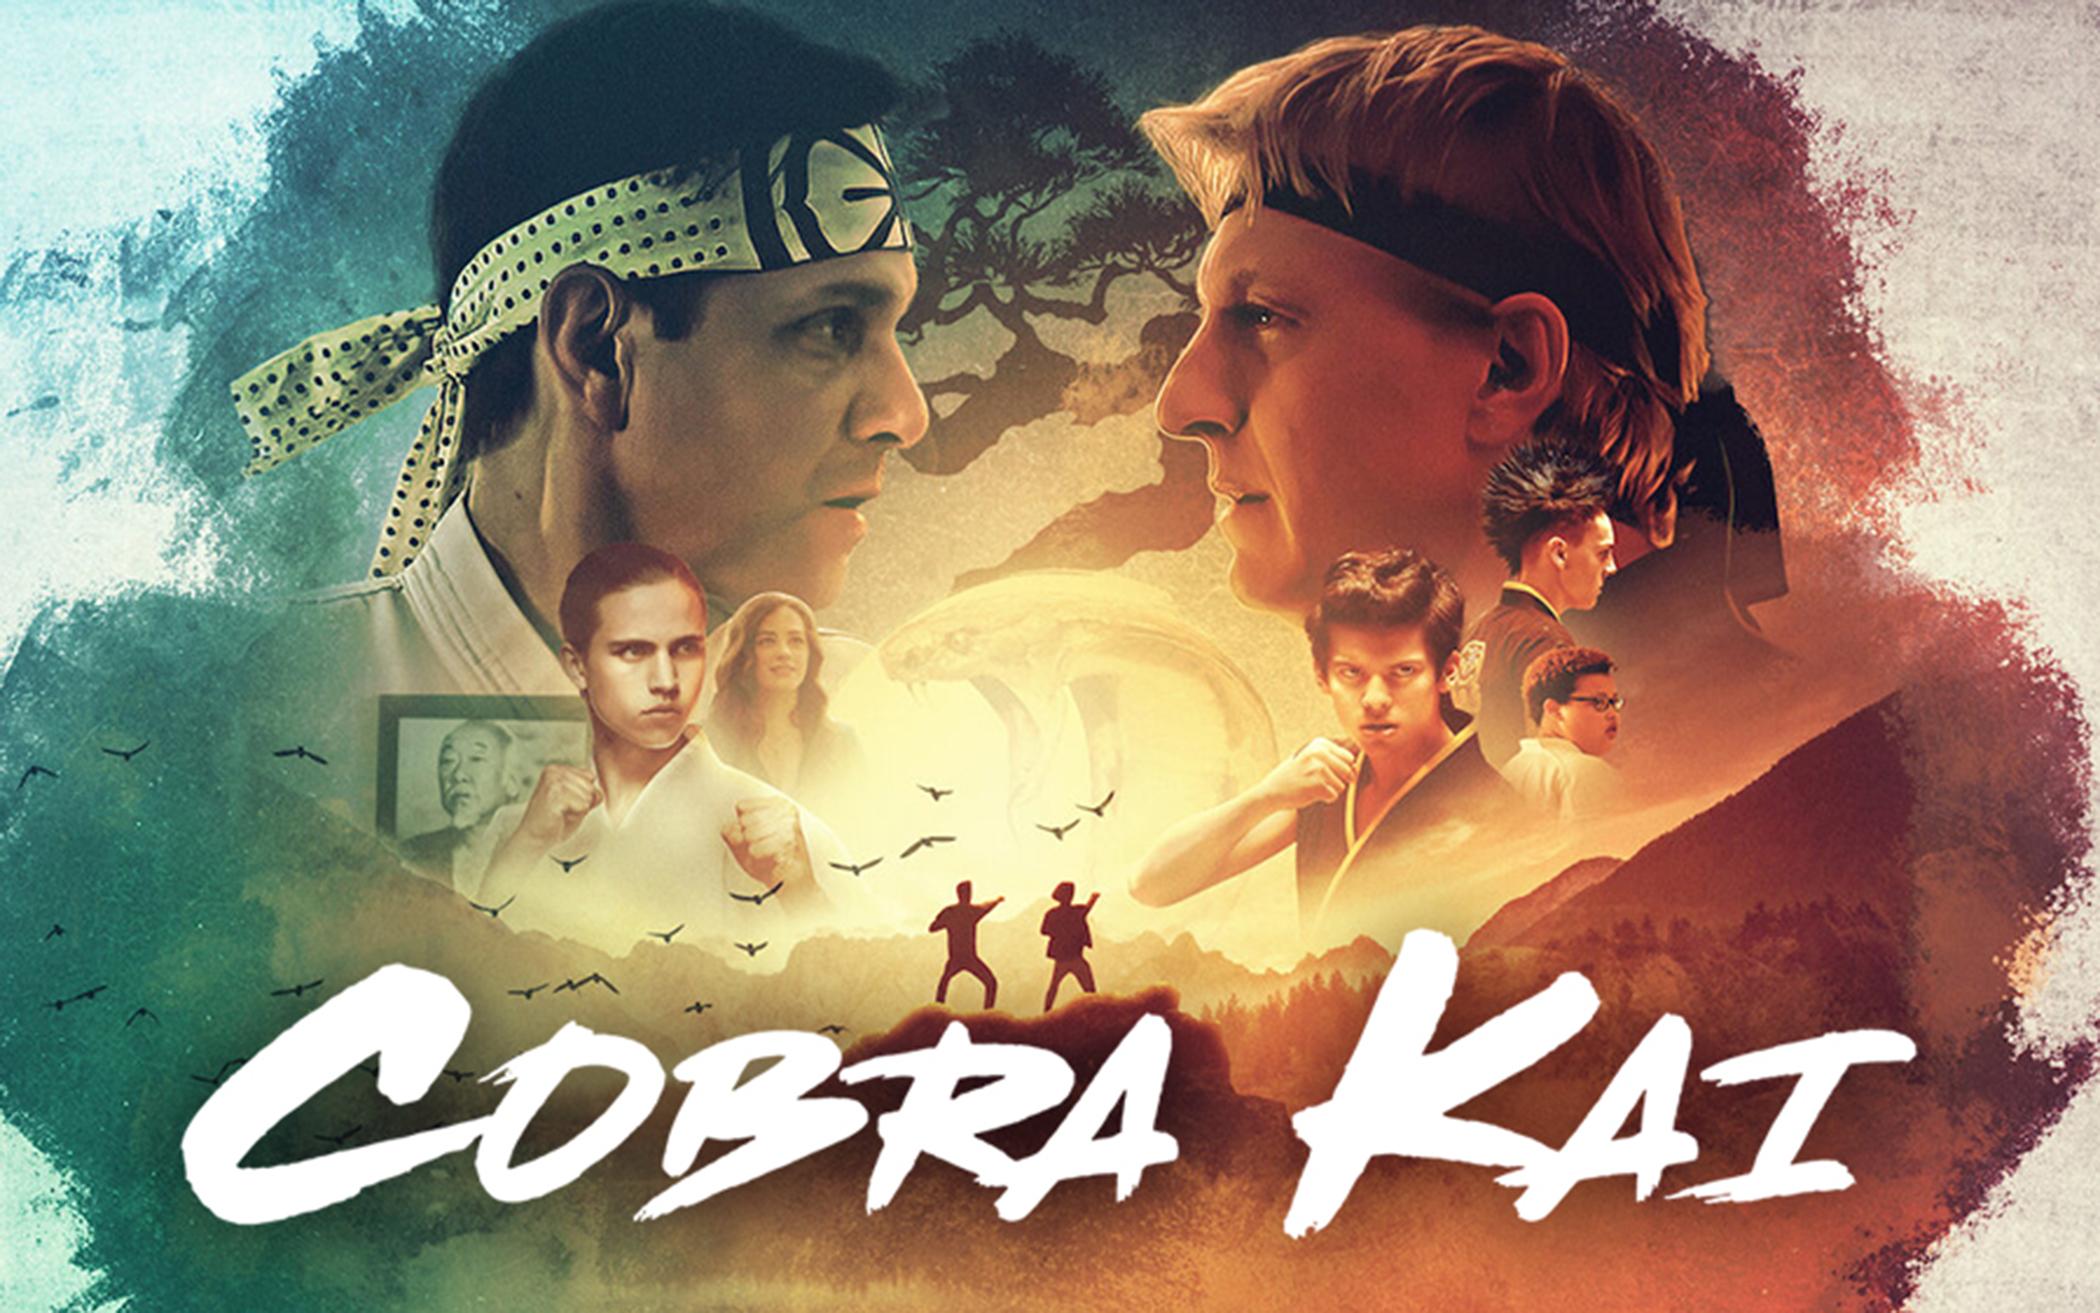 Cobra Kai - Netflix Series - Where To Watch